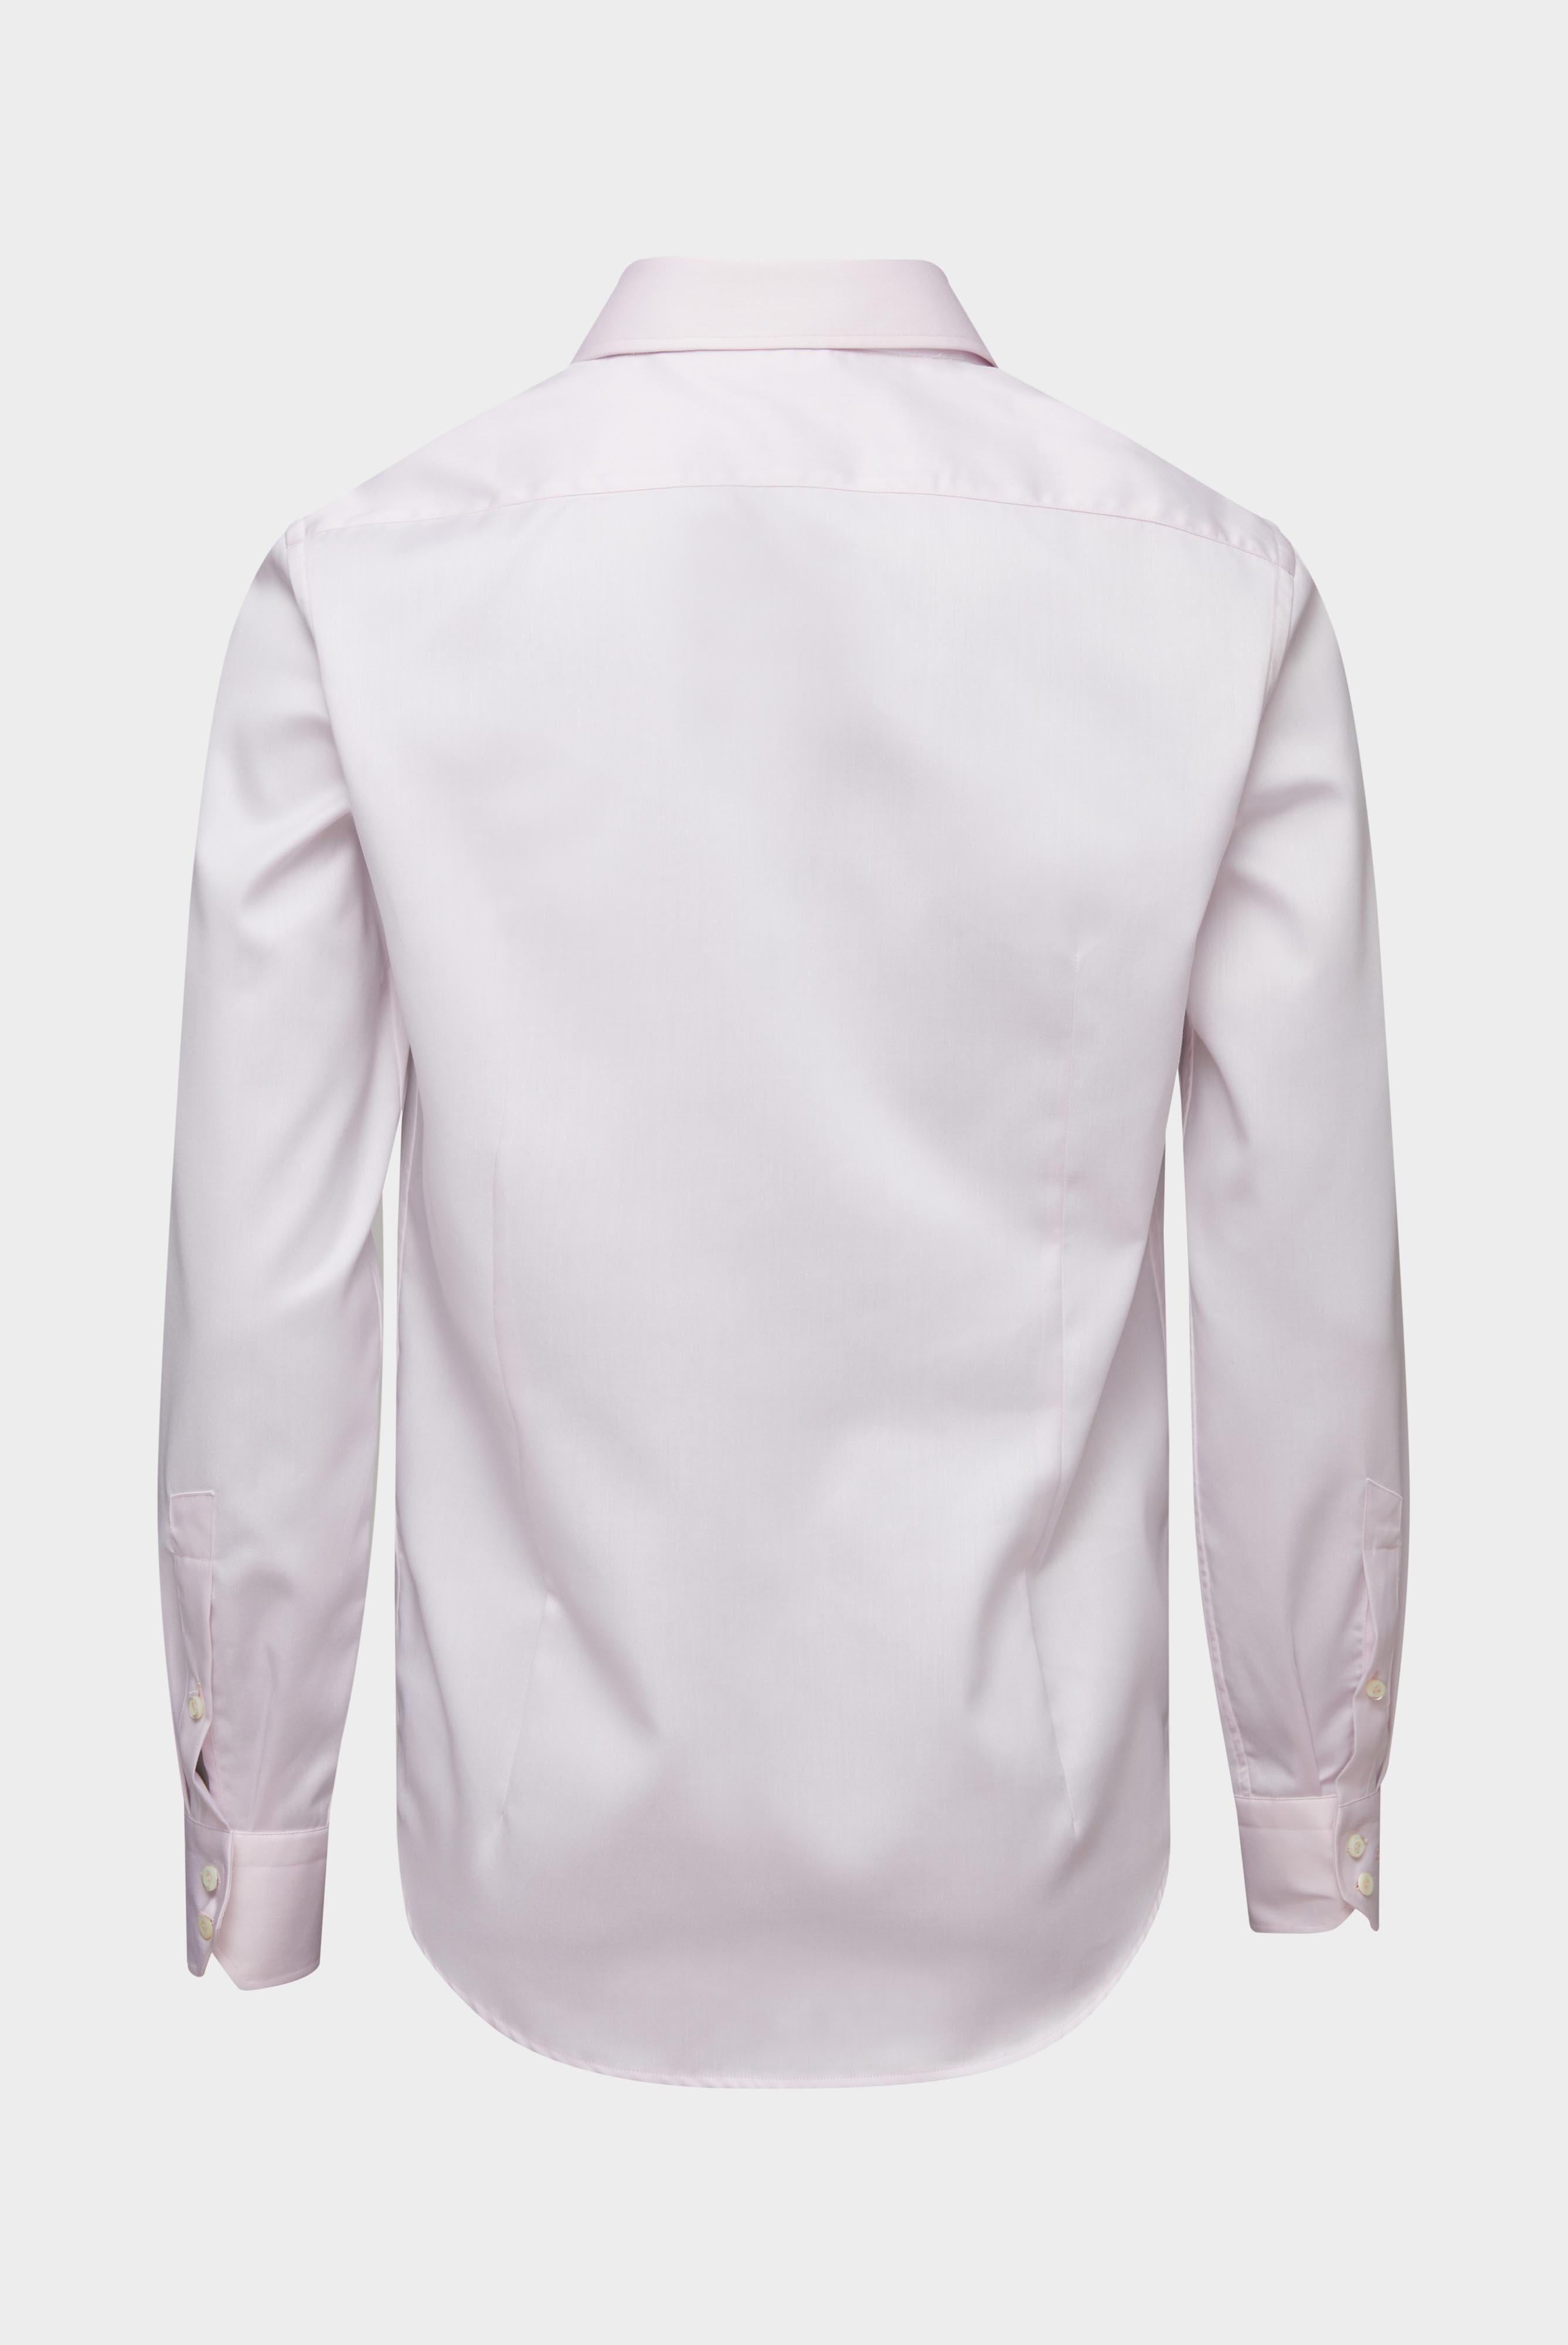 Easy Iron Shirts+Wrinkle-Free Fine-Twill Shirt+20.2019.BQ.132241.510.39